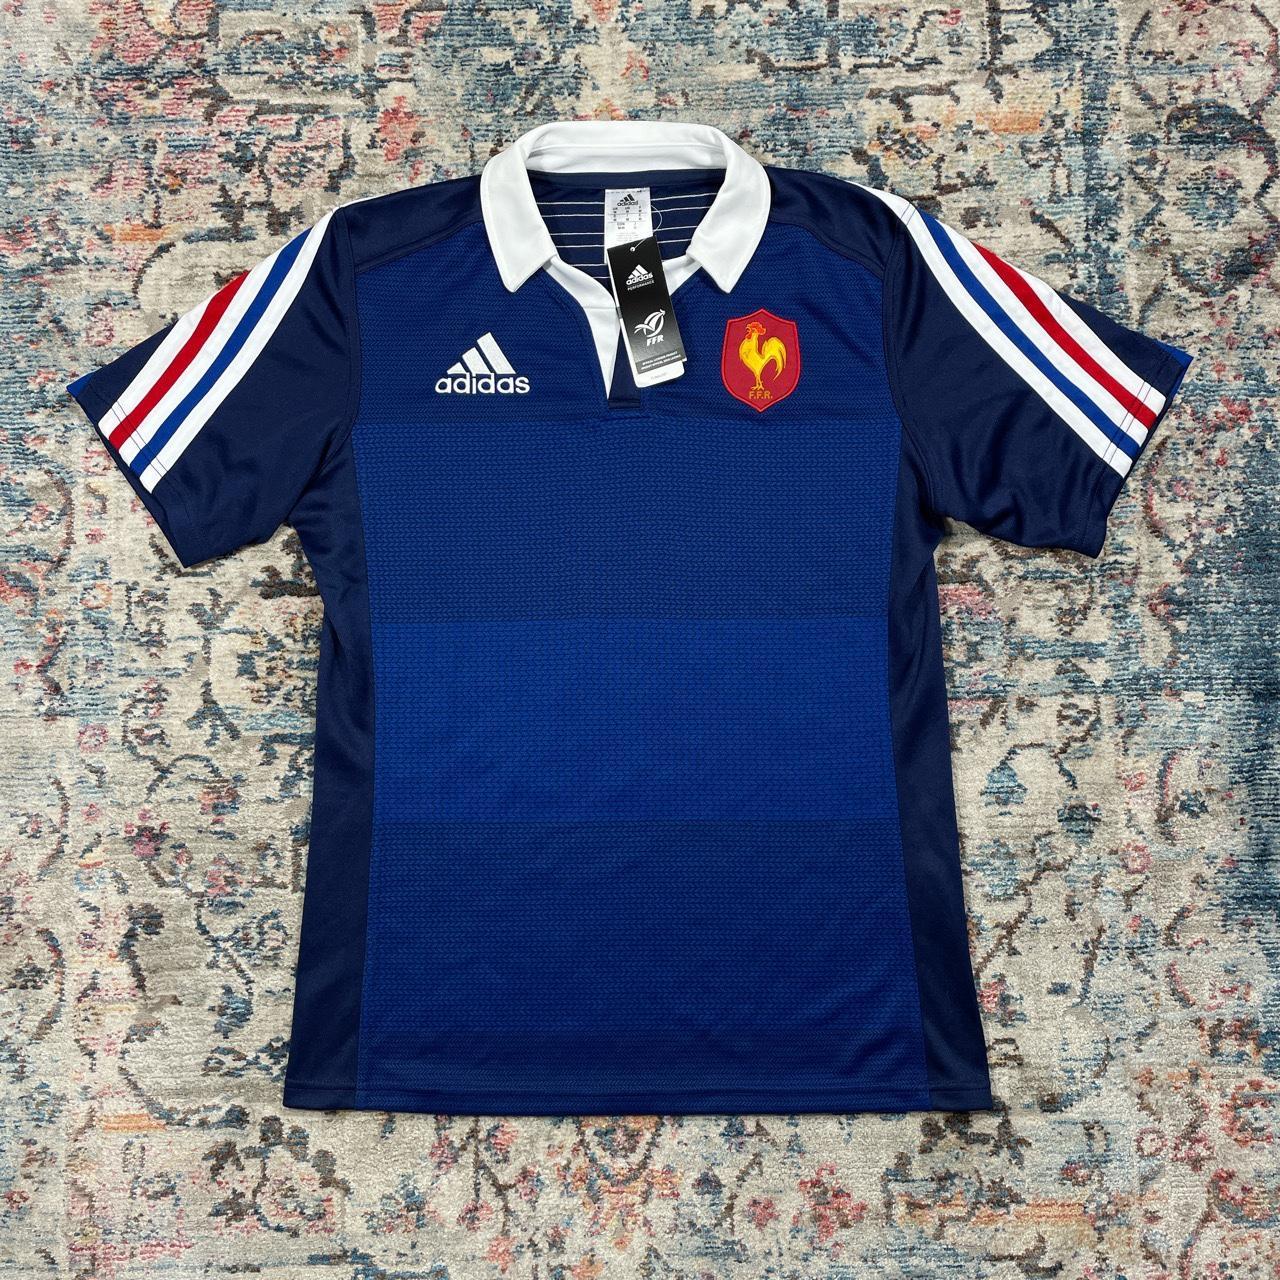 Adidas France 2011 Rugby Shirt